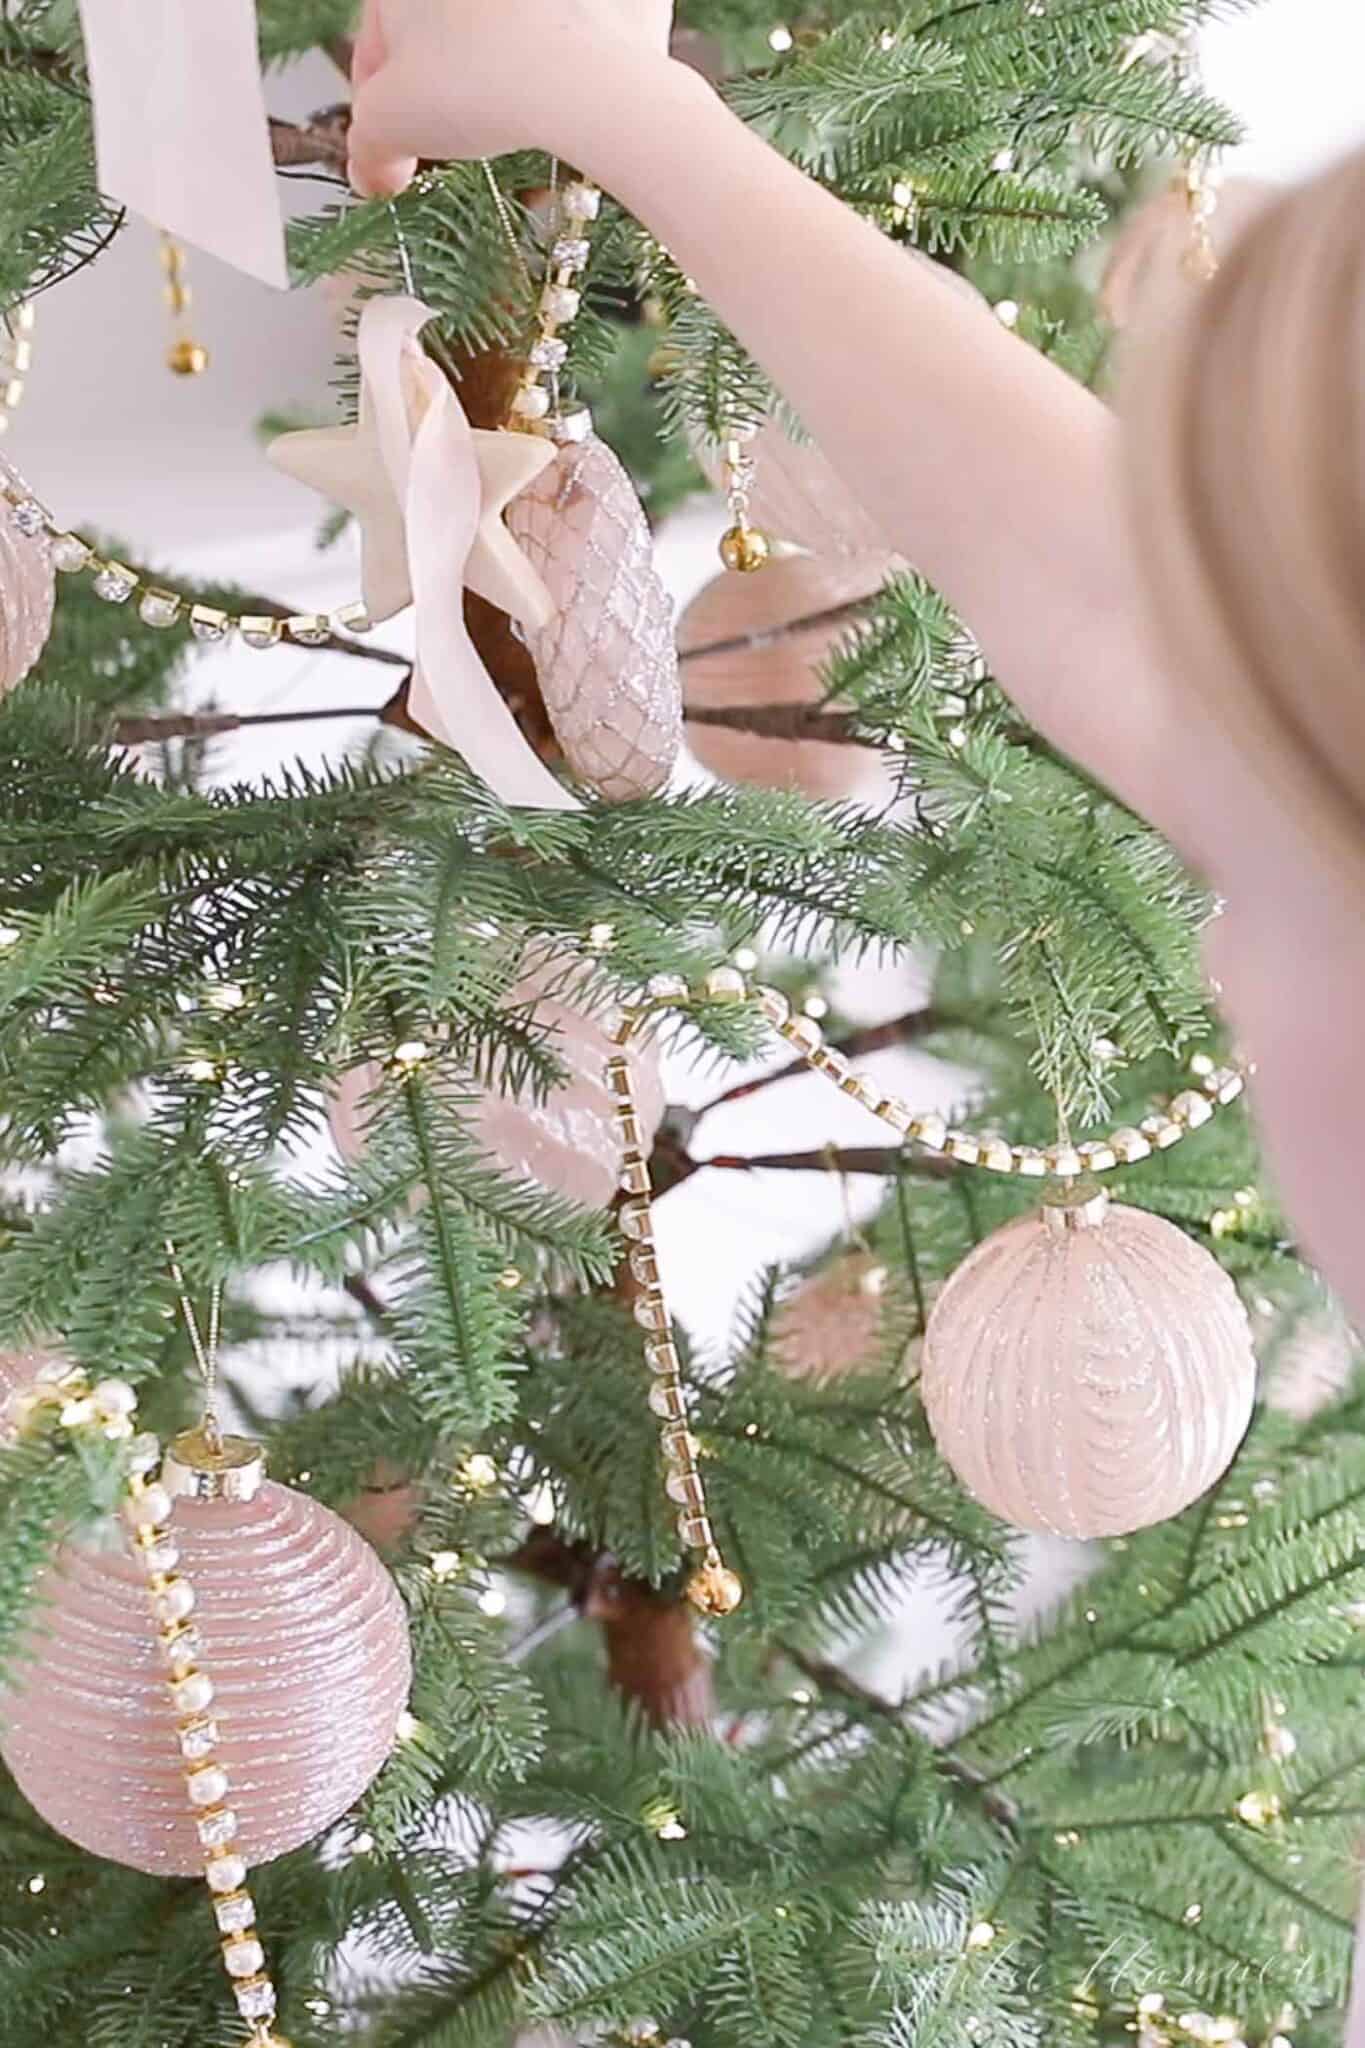 The Best Salt Dough Ornaments (with Video!) | Julie Blanner